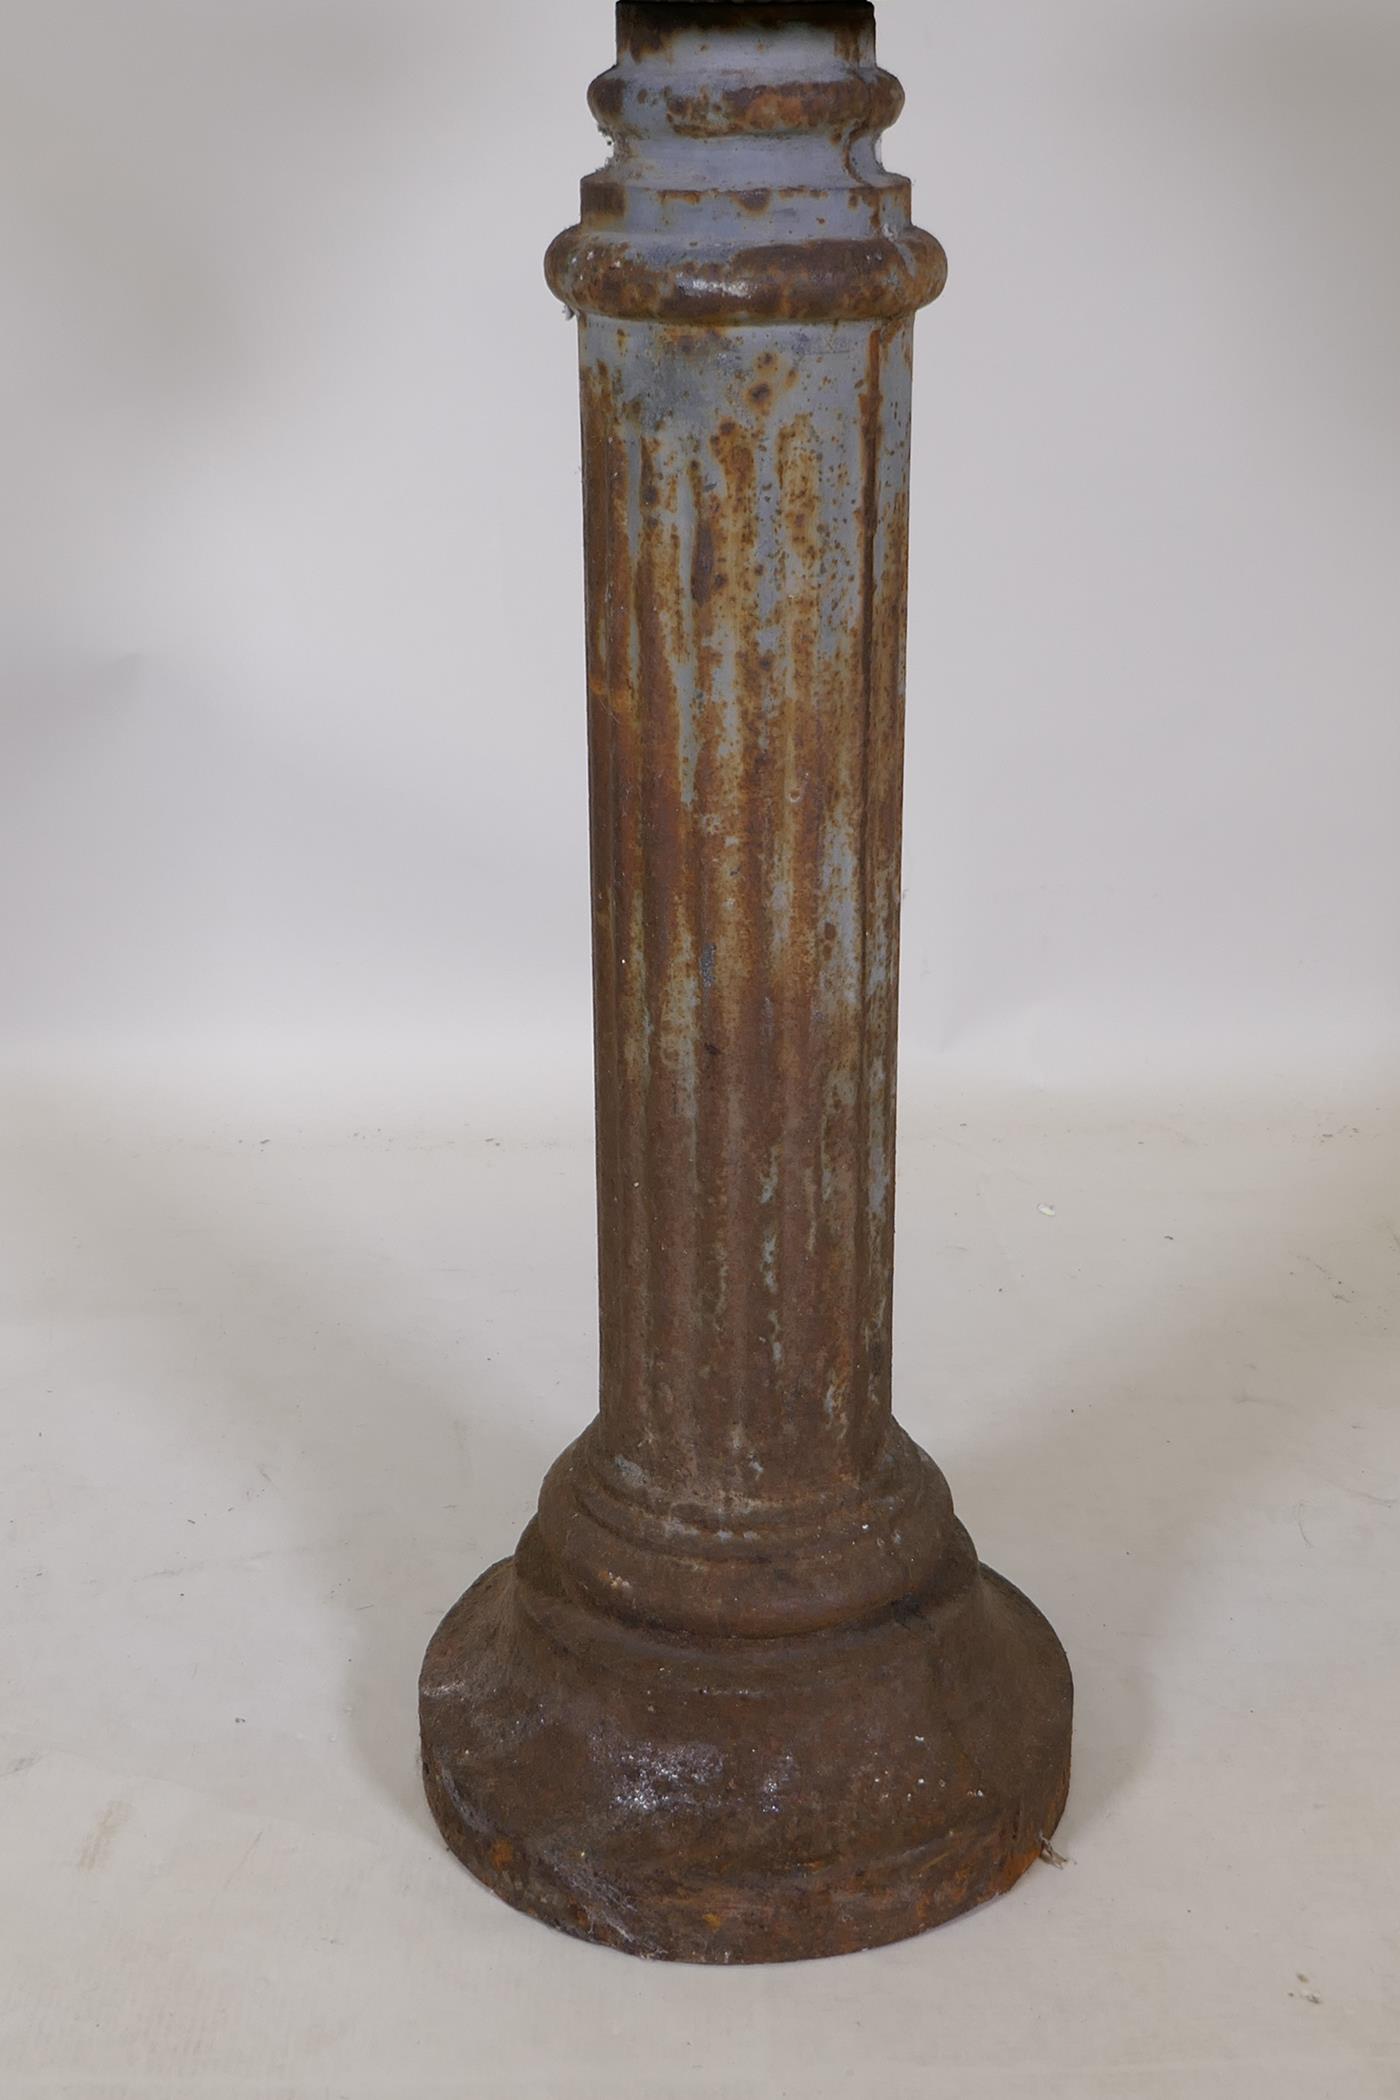 A C19th cast iron pedestal urn, 80cm high - Image 3 of 3